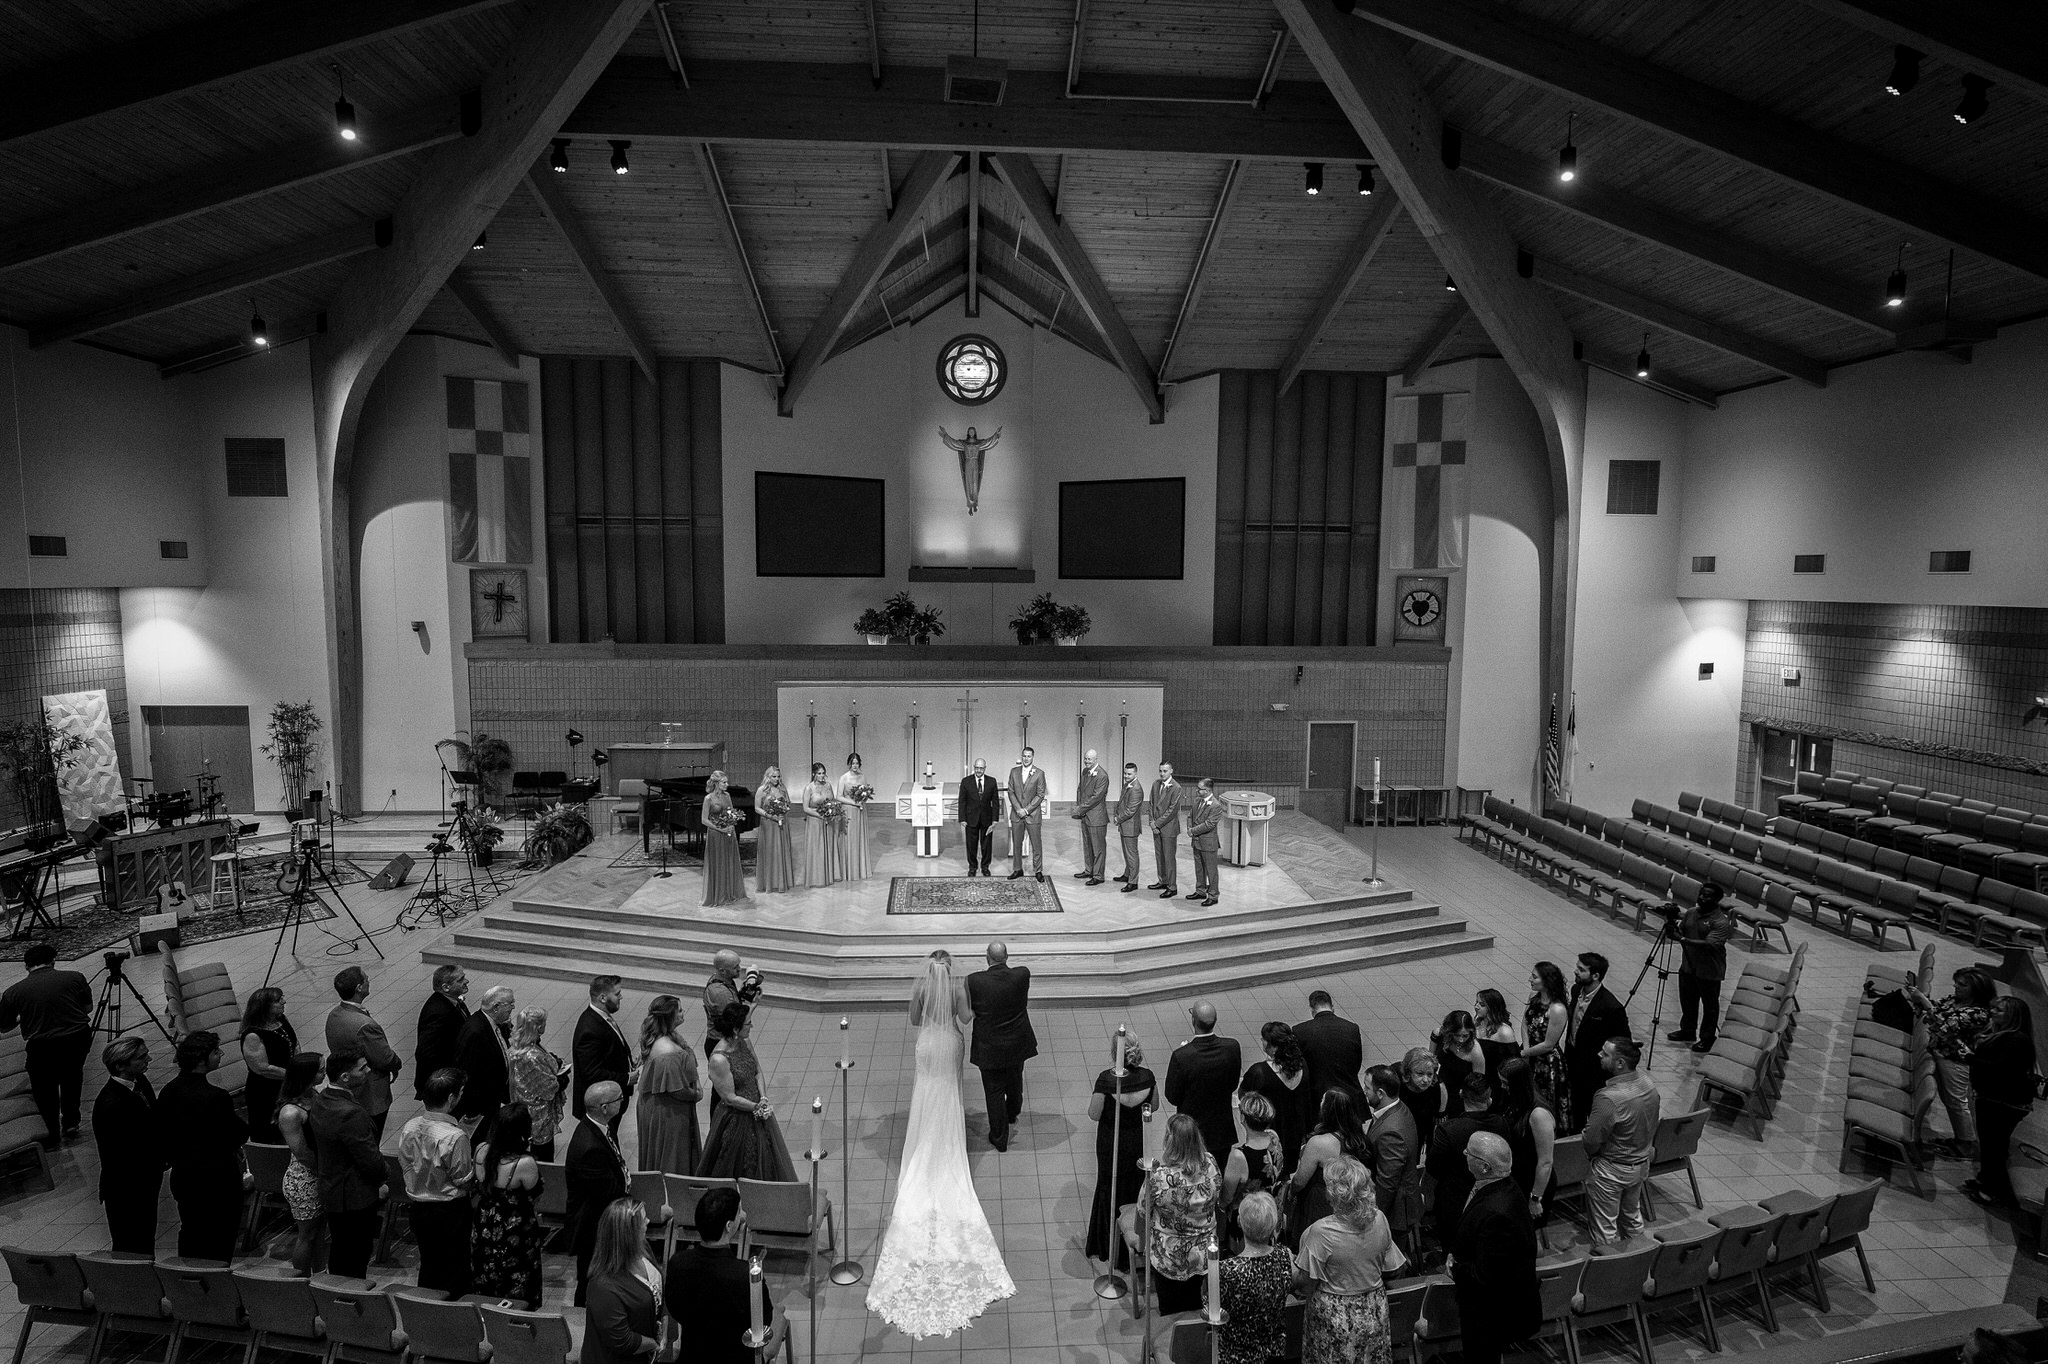  immanuel lutheran church wedding